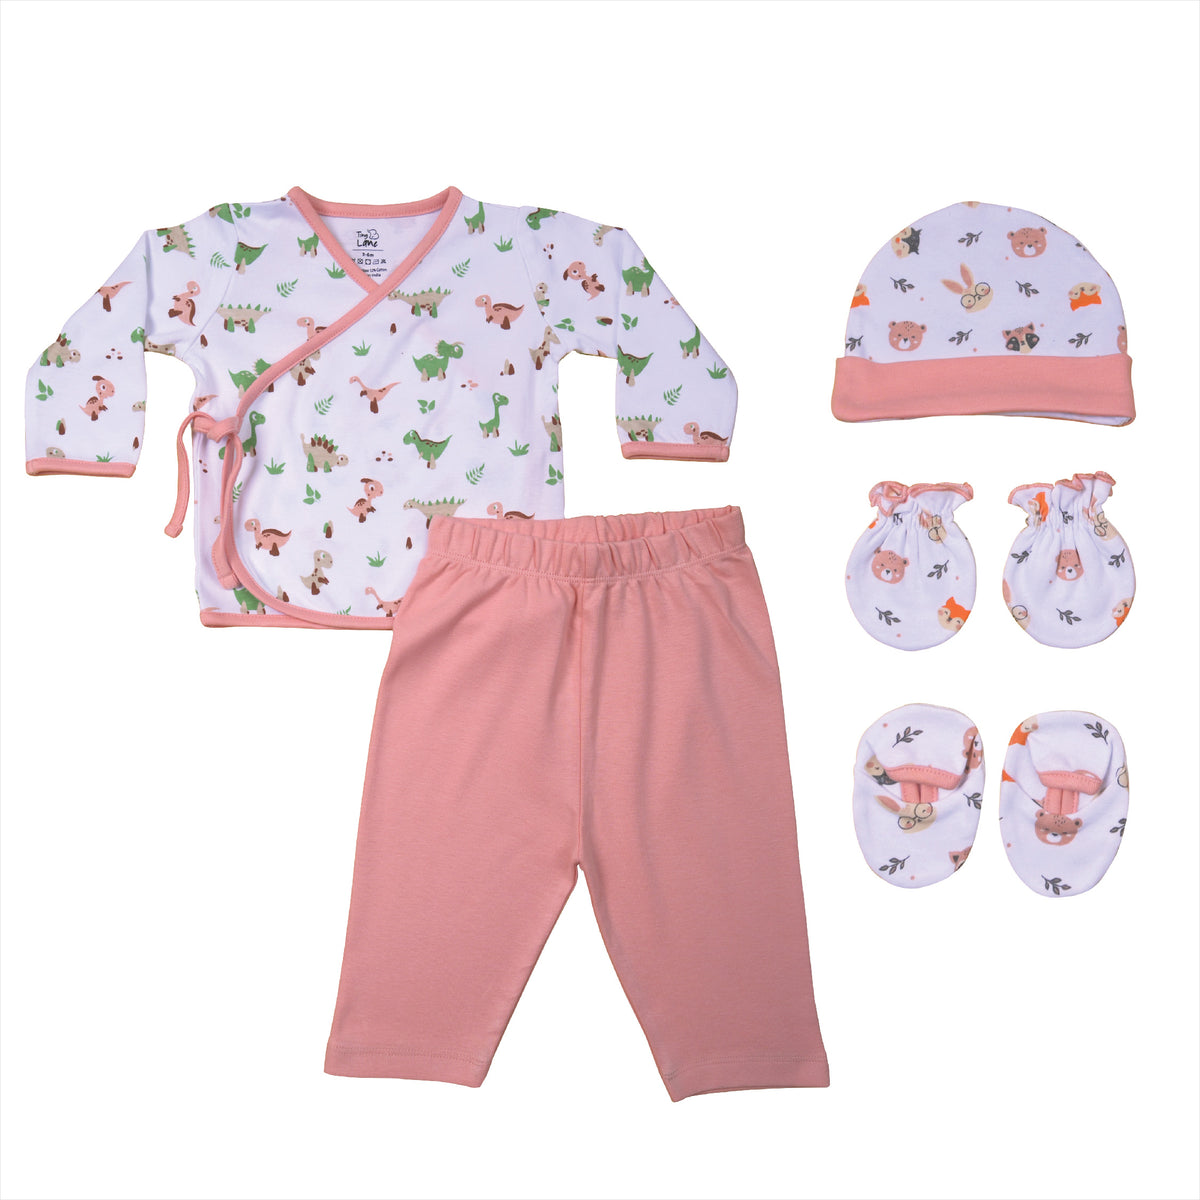 Dino Baby Clothing Set